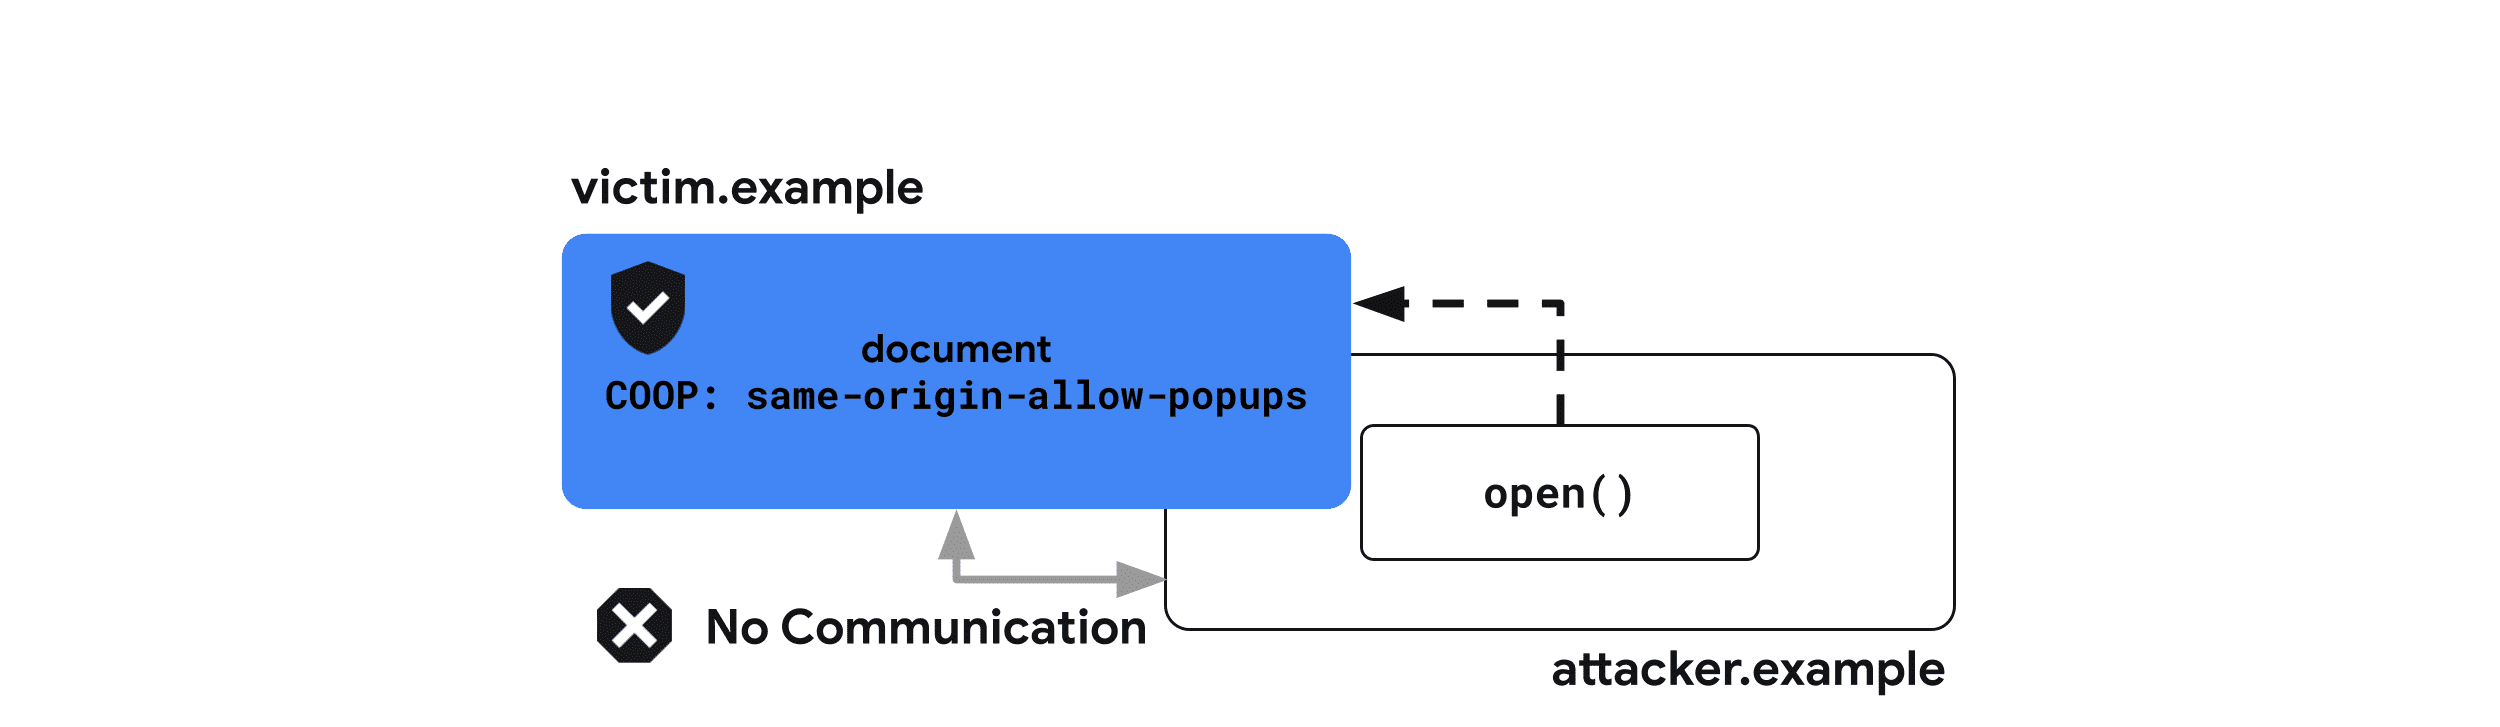 Cross-Origin-Opener-Policy： same-origin-allow-popups